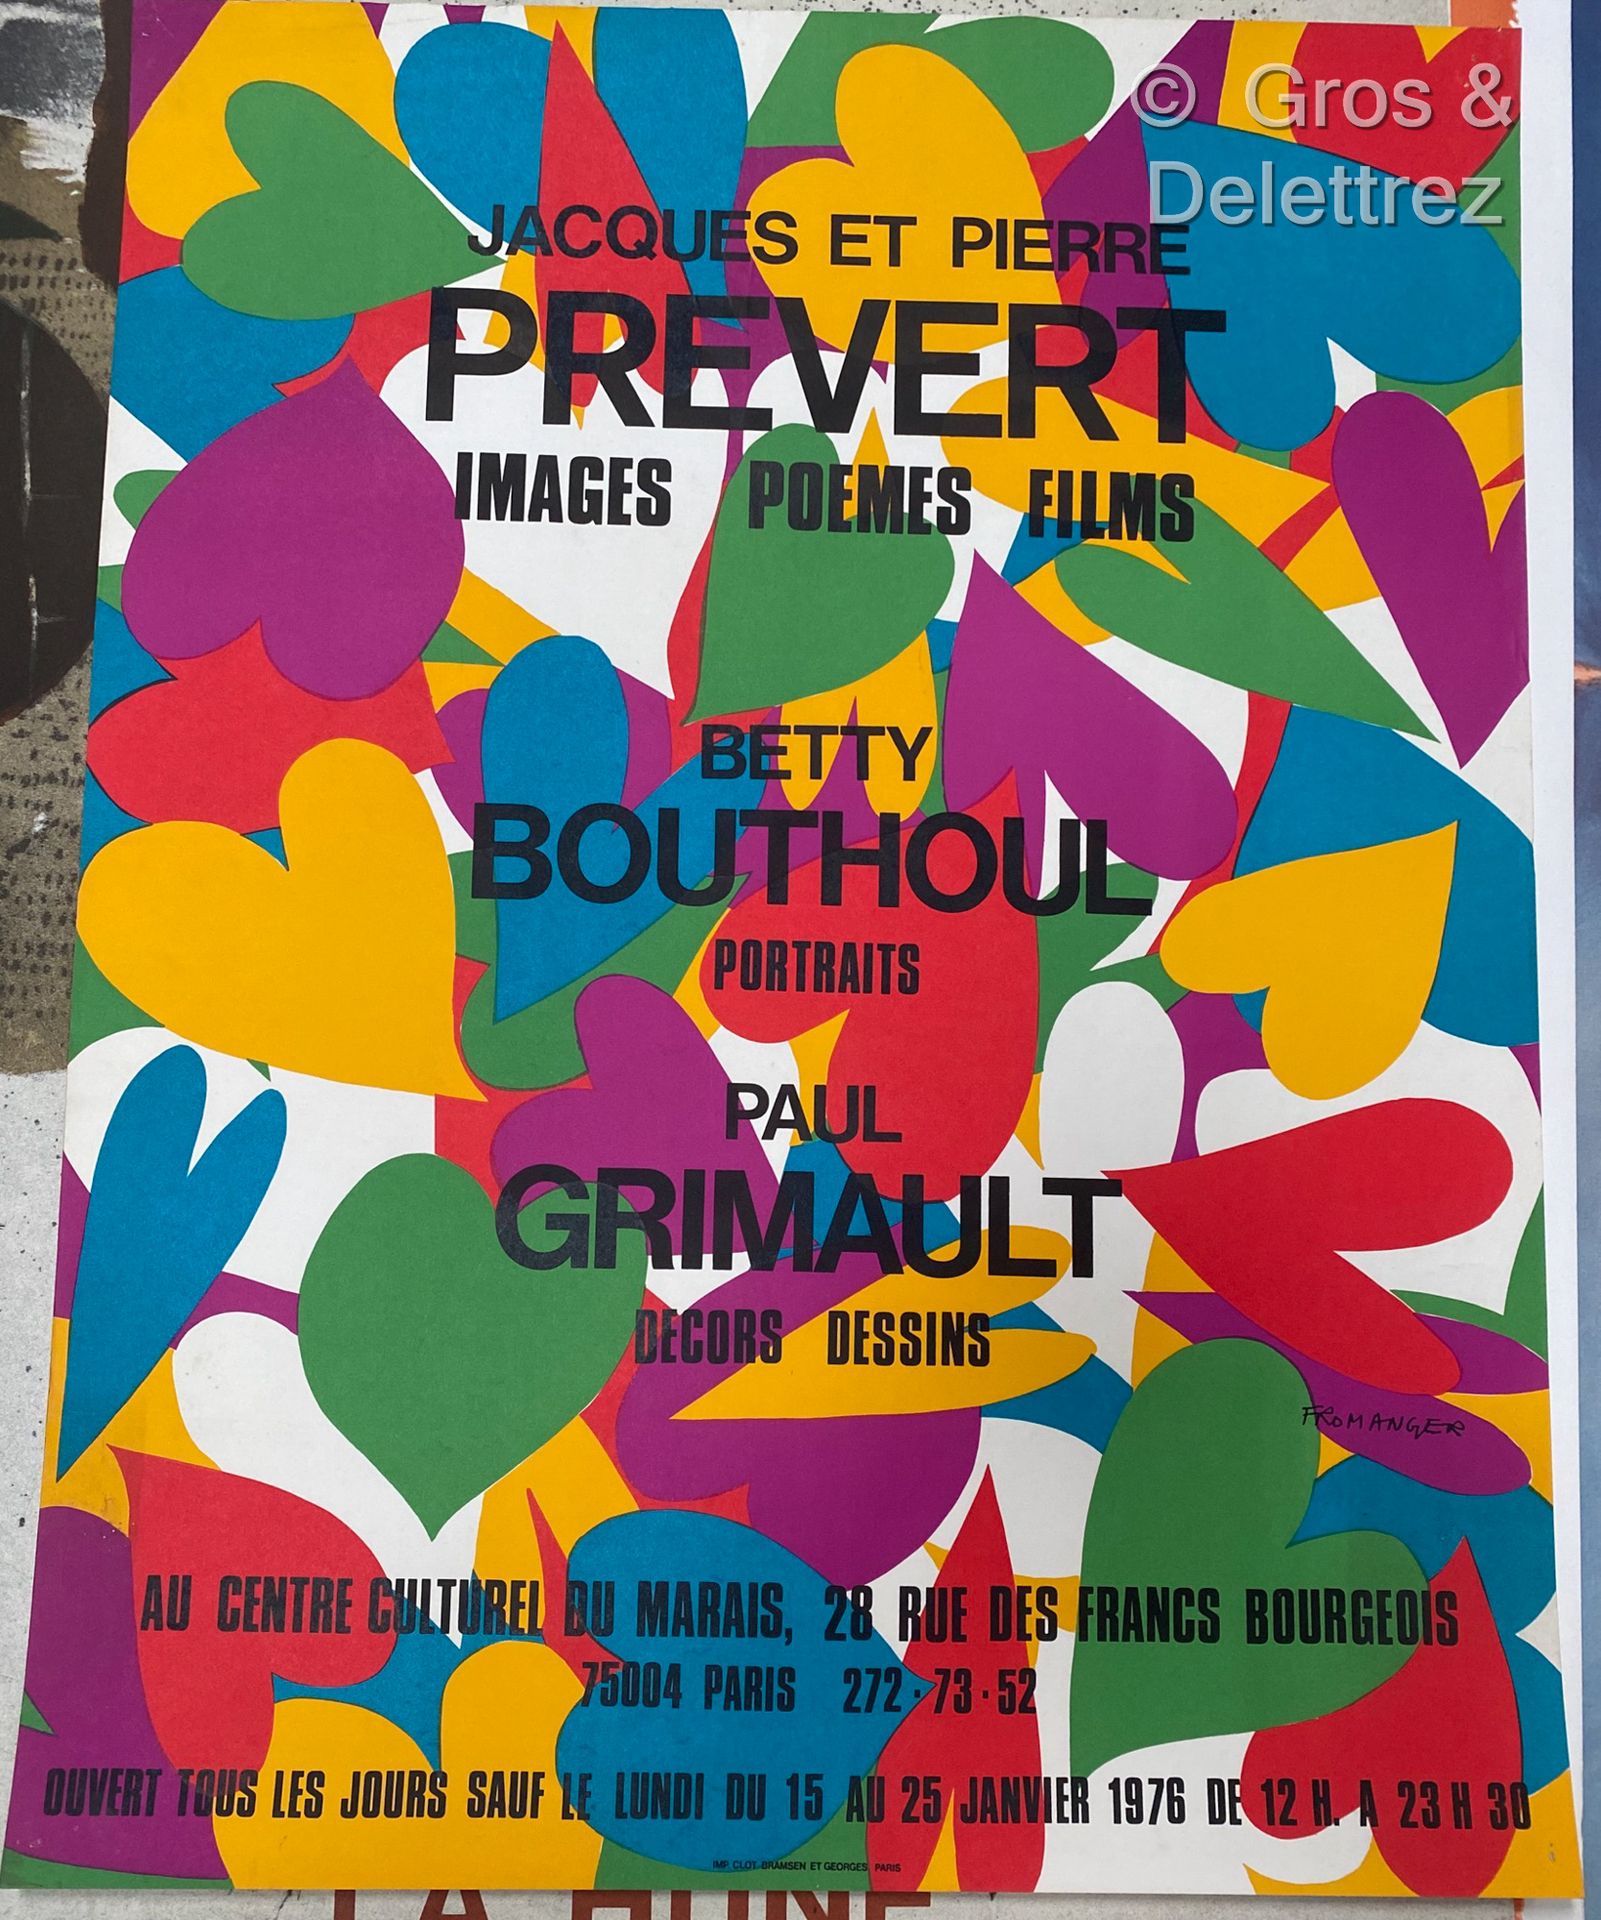 Null (E) FROMANGER Gérard

雅克和皮埃尔-普雷弗特，"图像、诗歌、电影

Betty Bouthoul, "肖像画

保罗-格里莫，"&hellip;